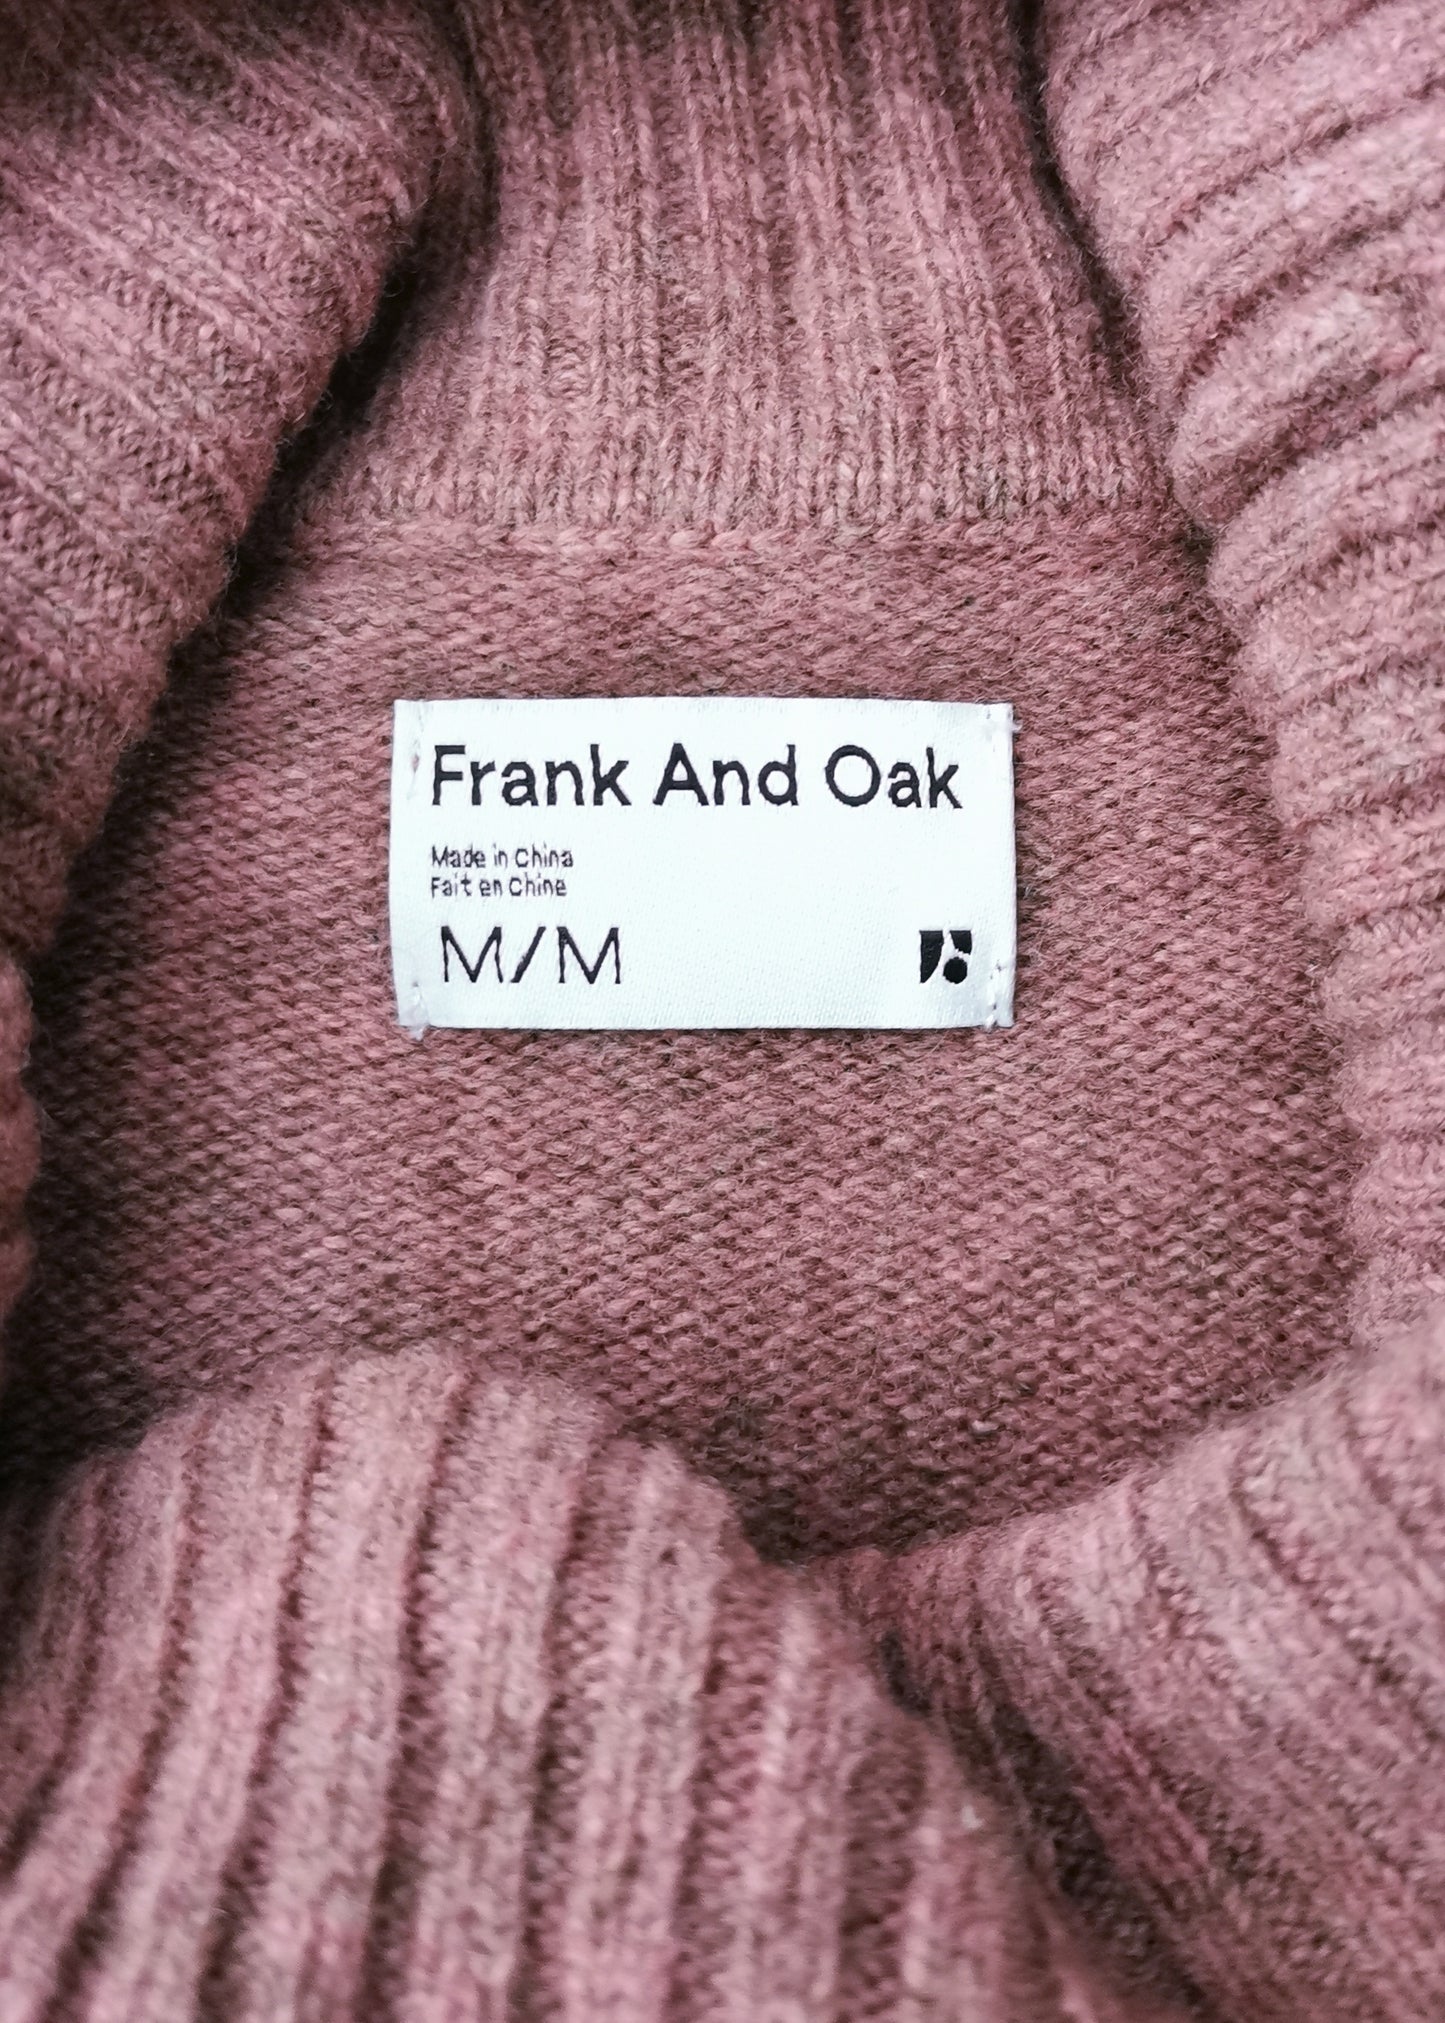 Frank And Oak Yak & Merino Wool Sweater (M)